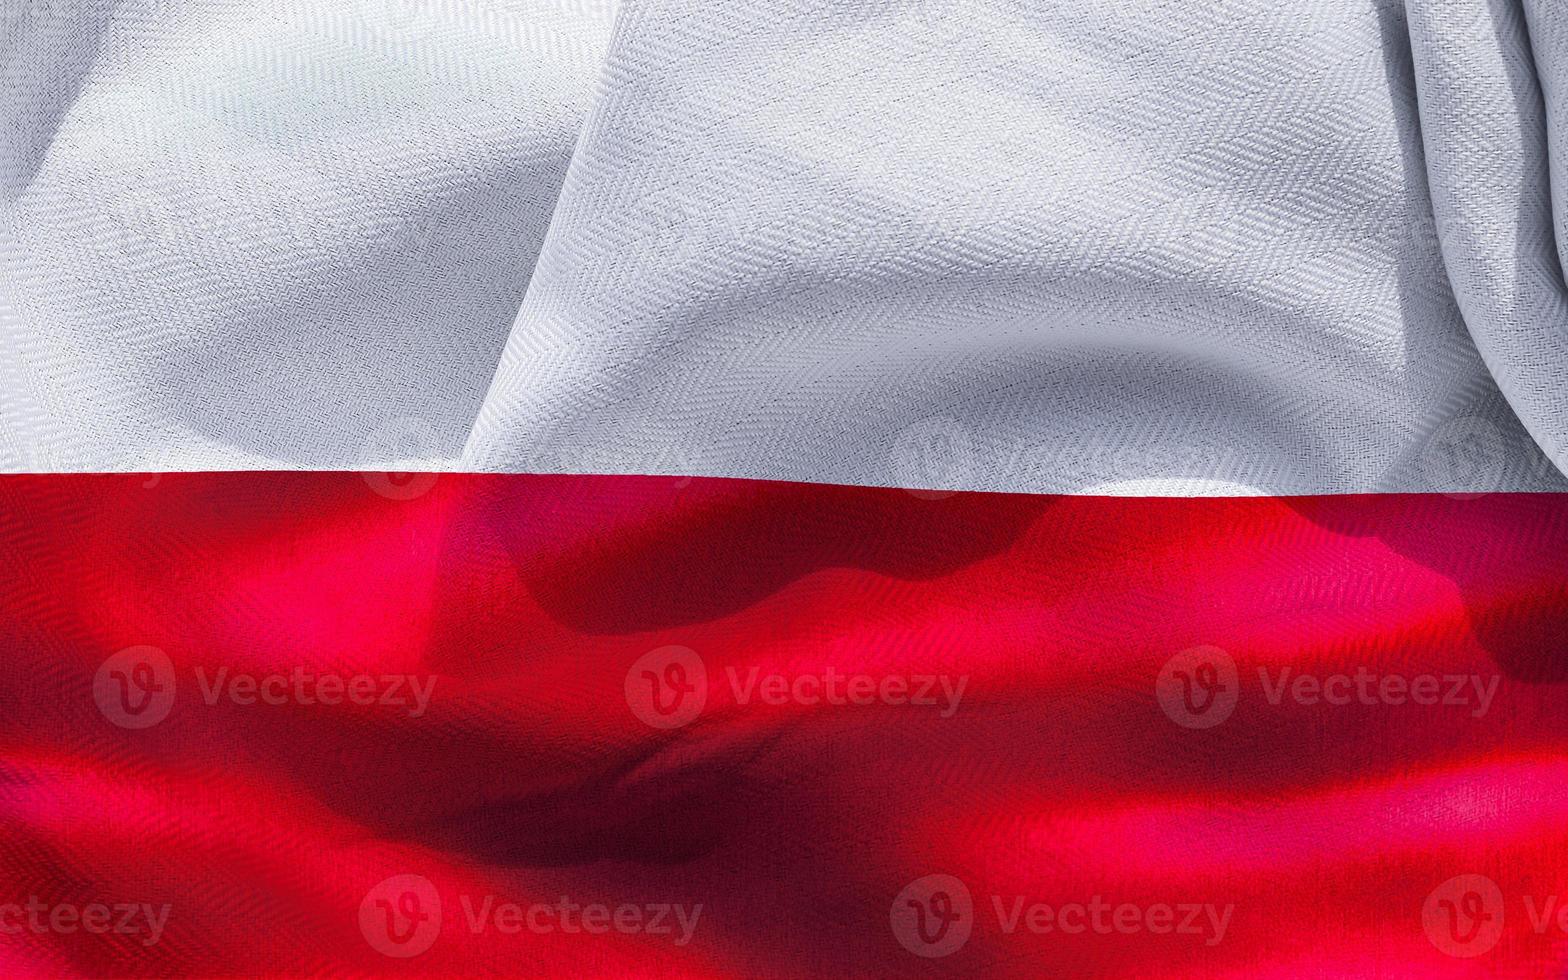 3D-Illustration of a Poland flag - realistic waving fabric flag photo